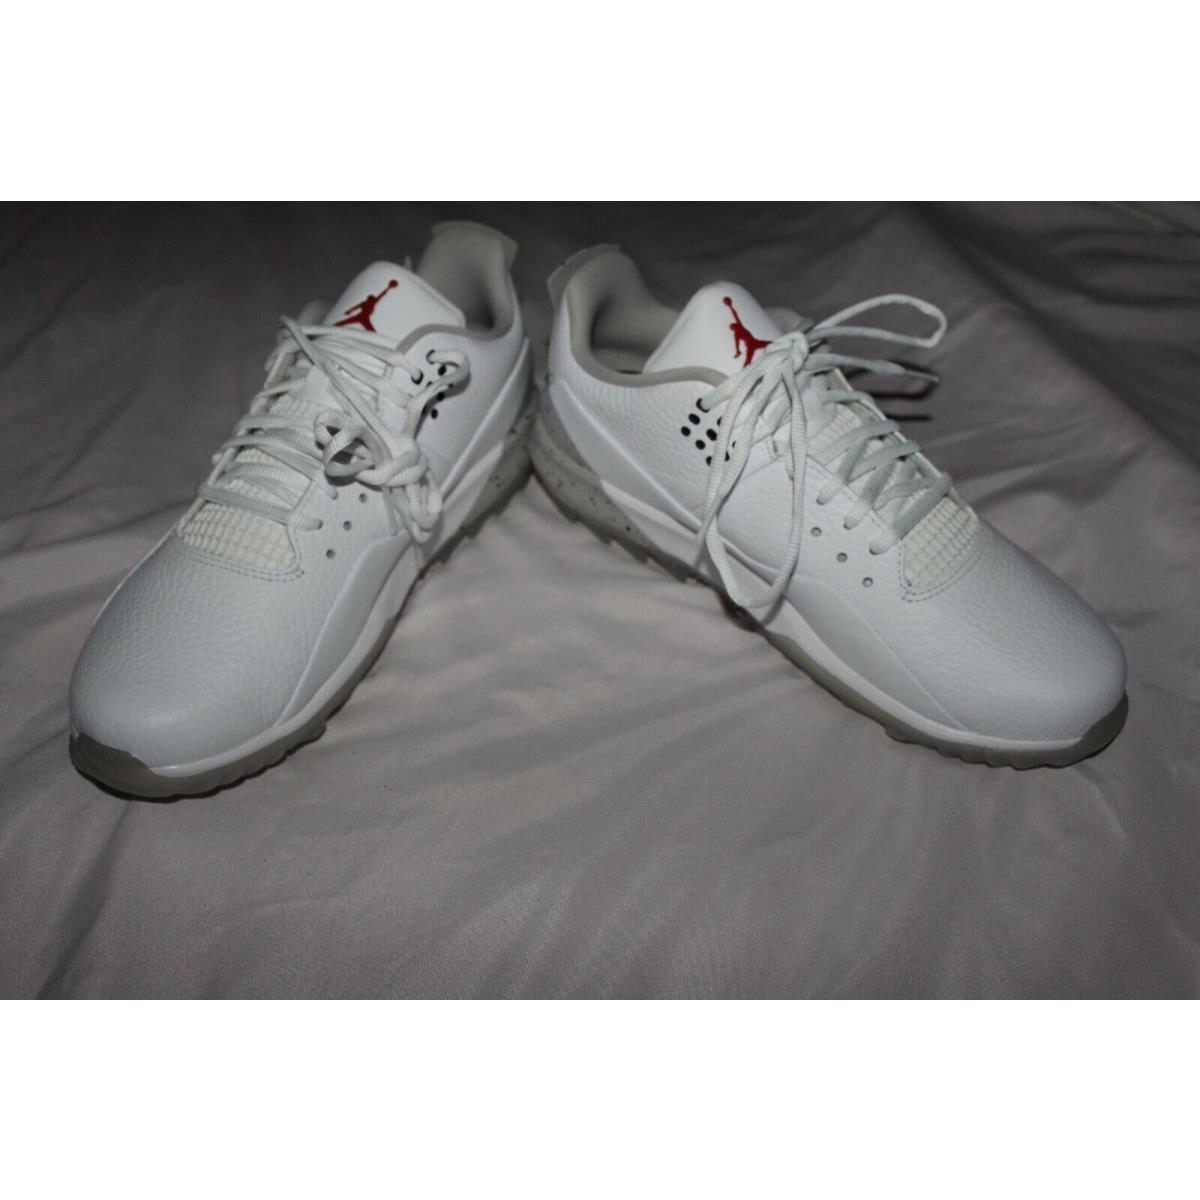 Nike shoes ADG - White 2